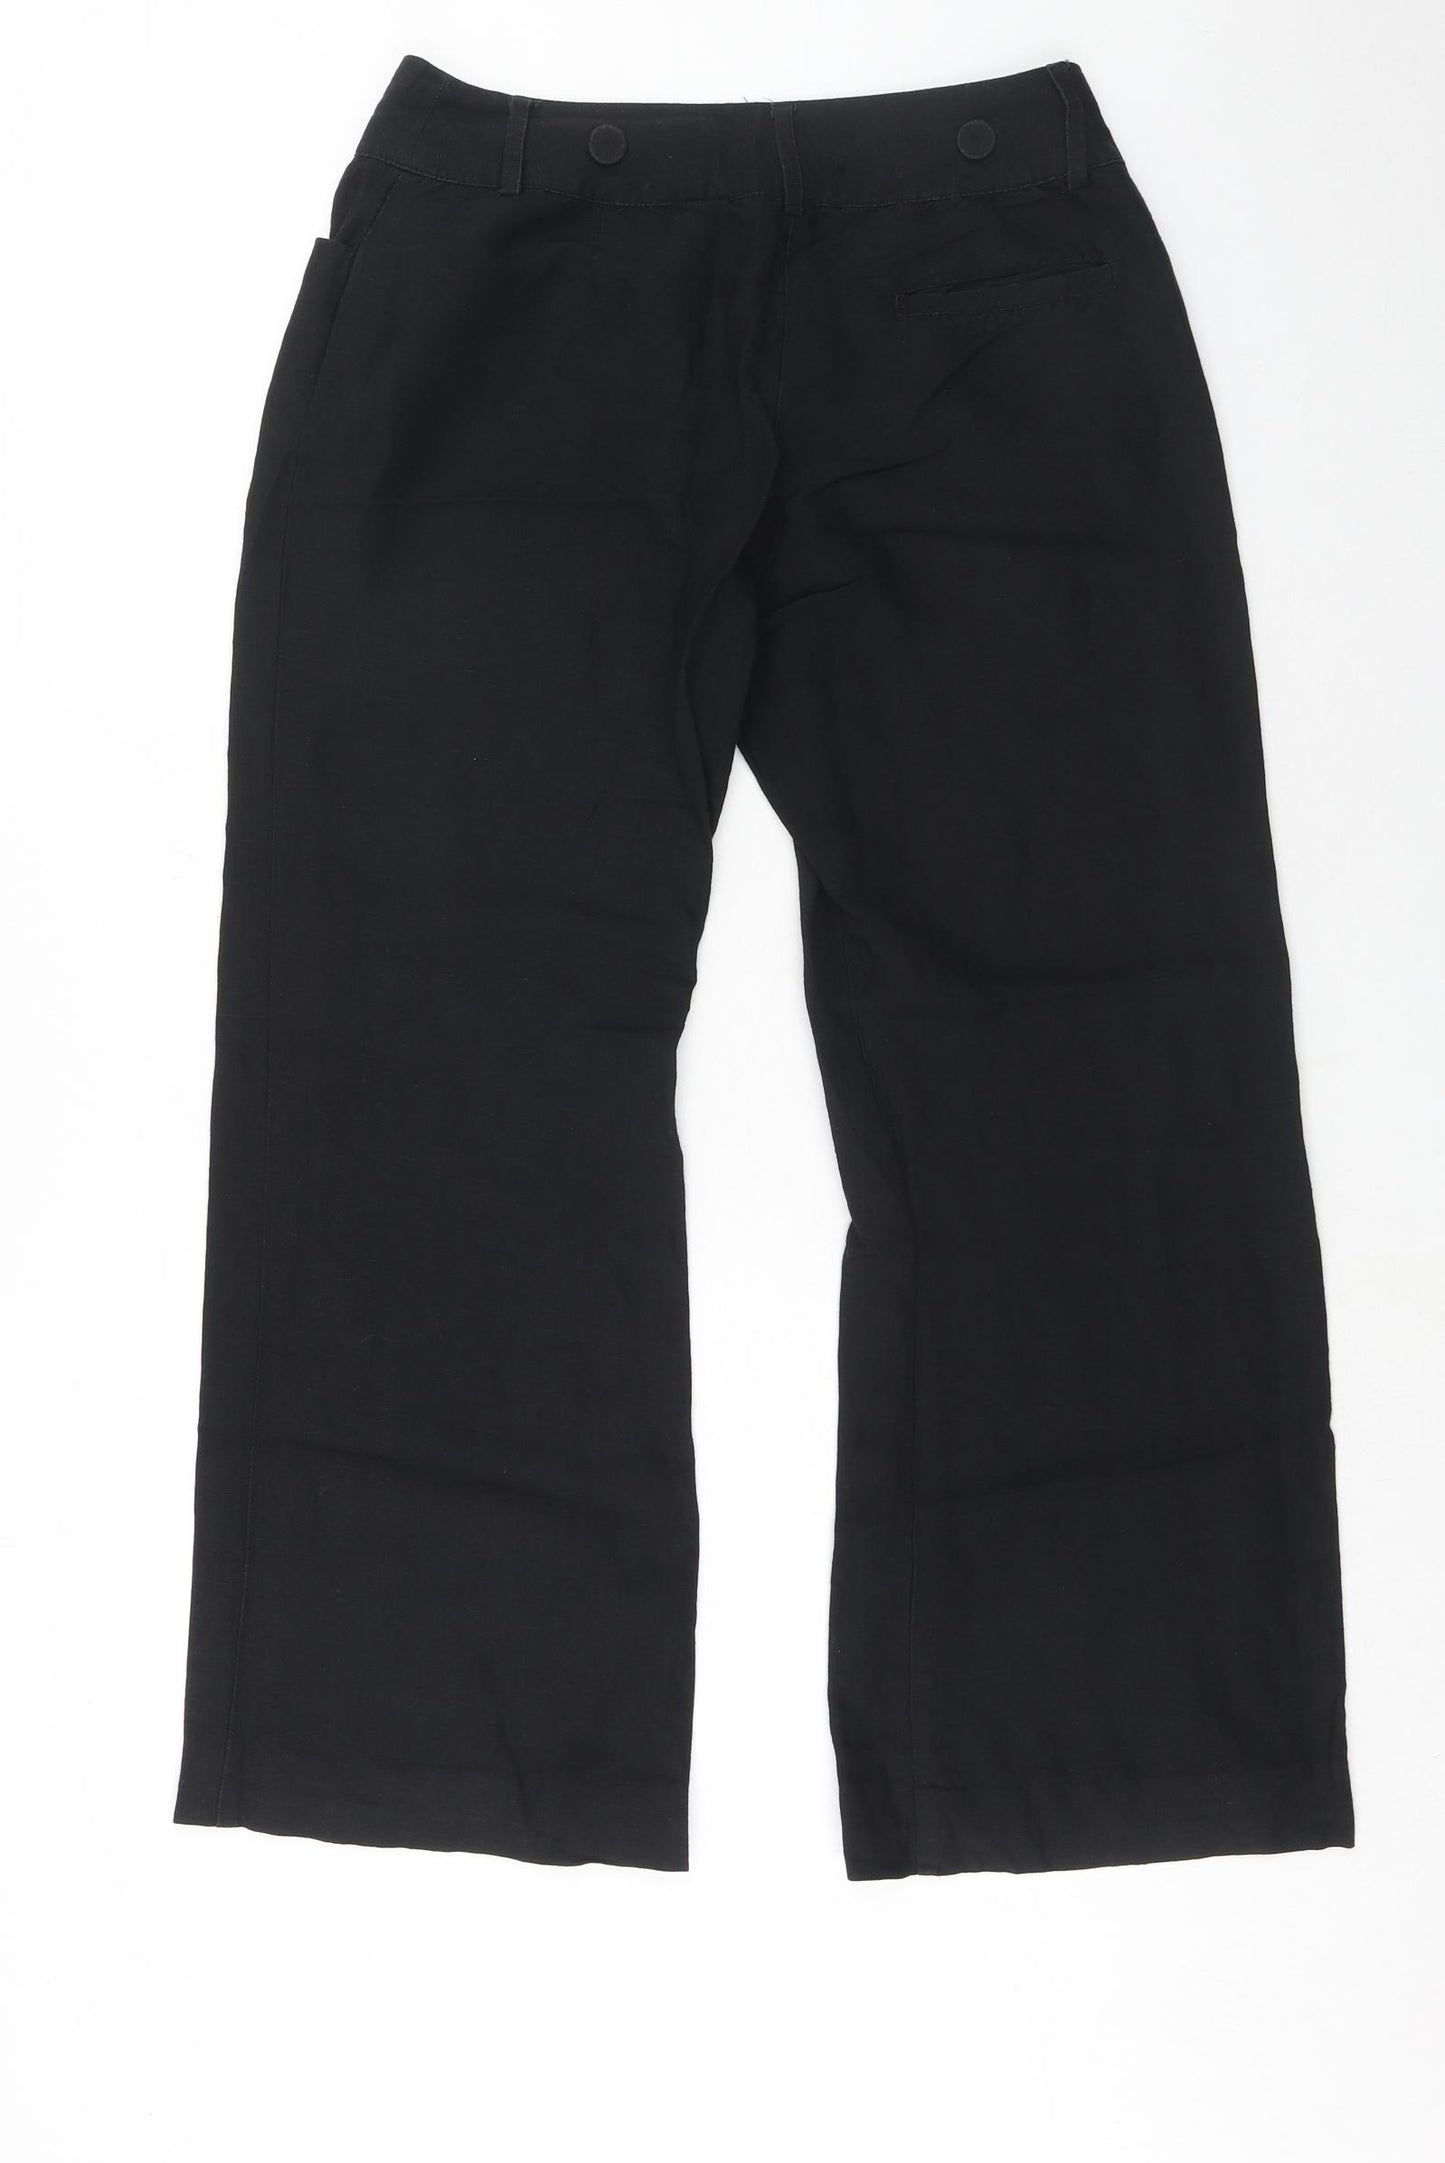 Oasis Womens Black Linen Trousers Size 10 Regular Hook & Eye